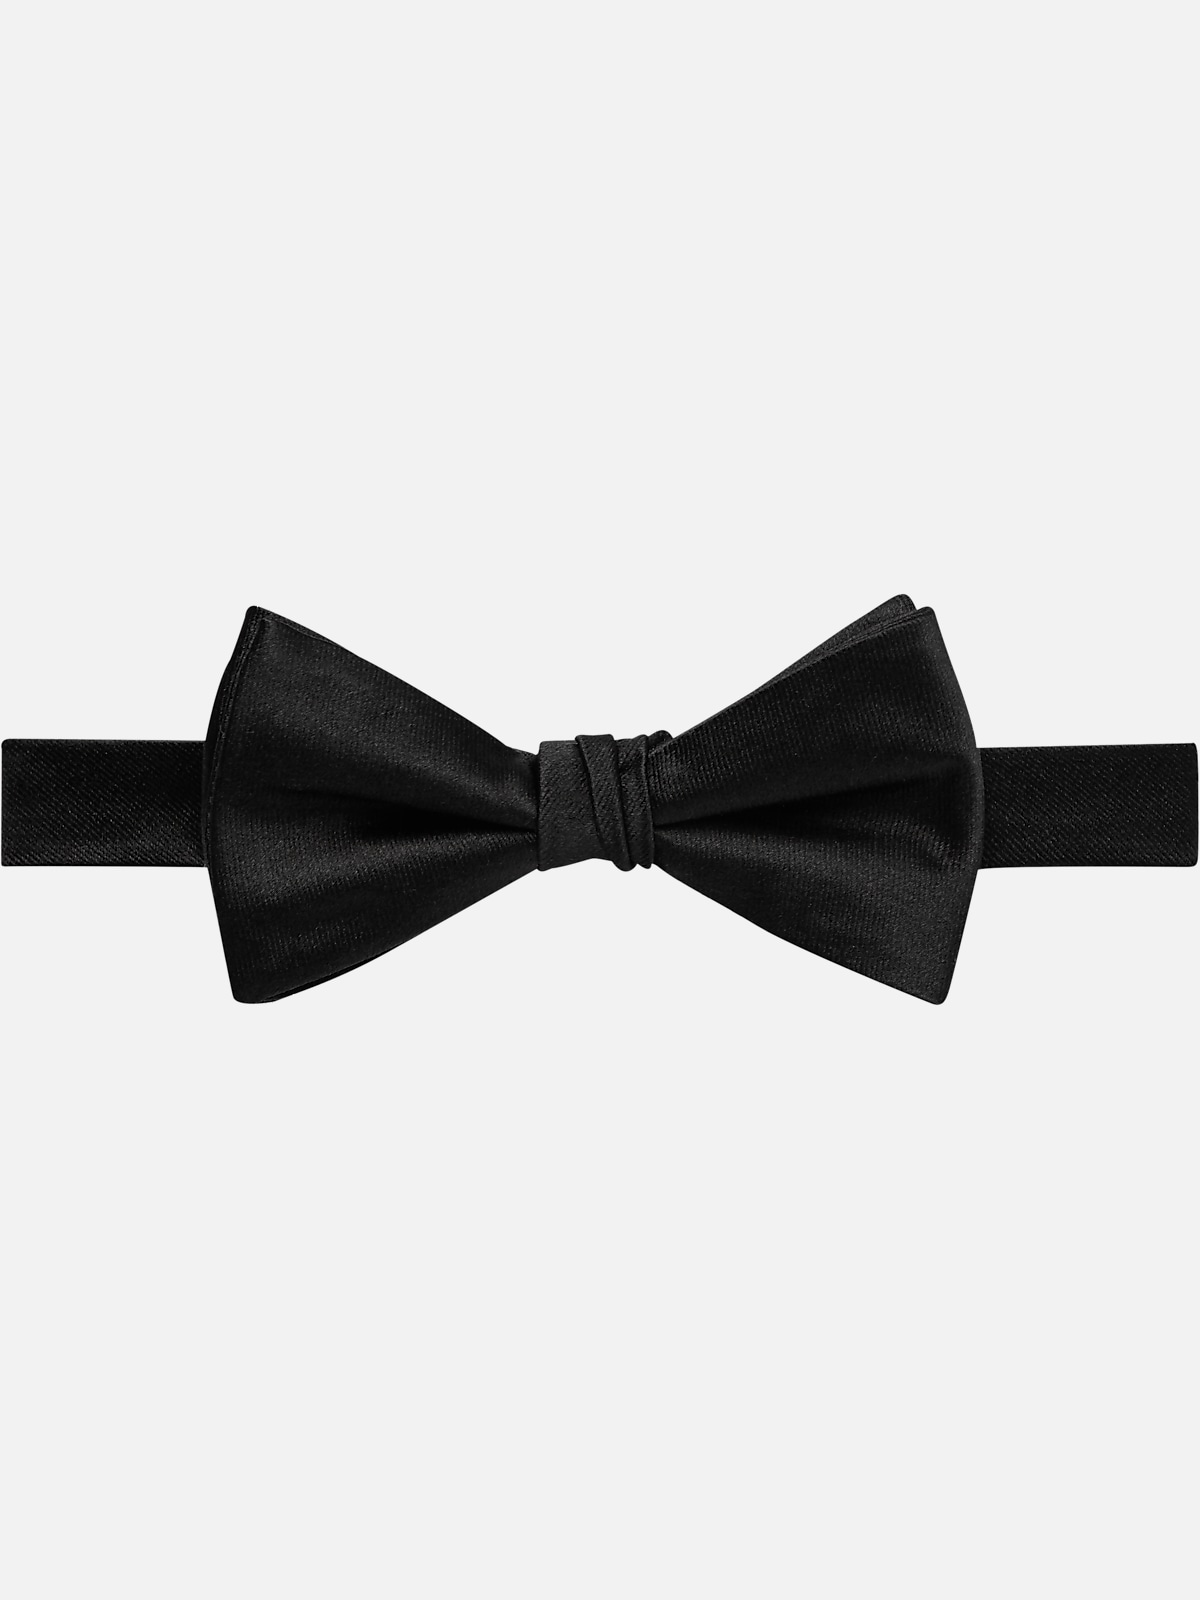 Joseph Abboud Pre-Tied Bow Tie | All Clearance $39.99| Men's Wearhouse